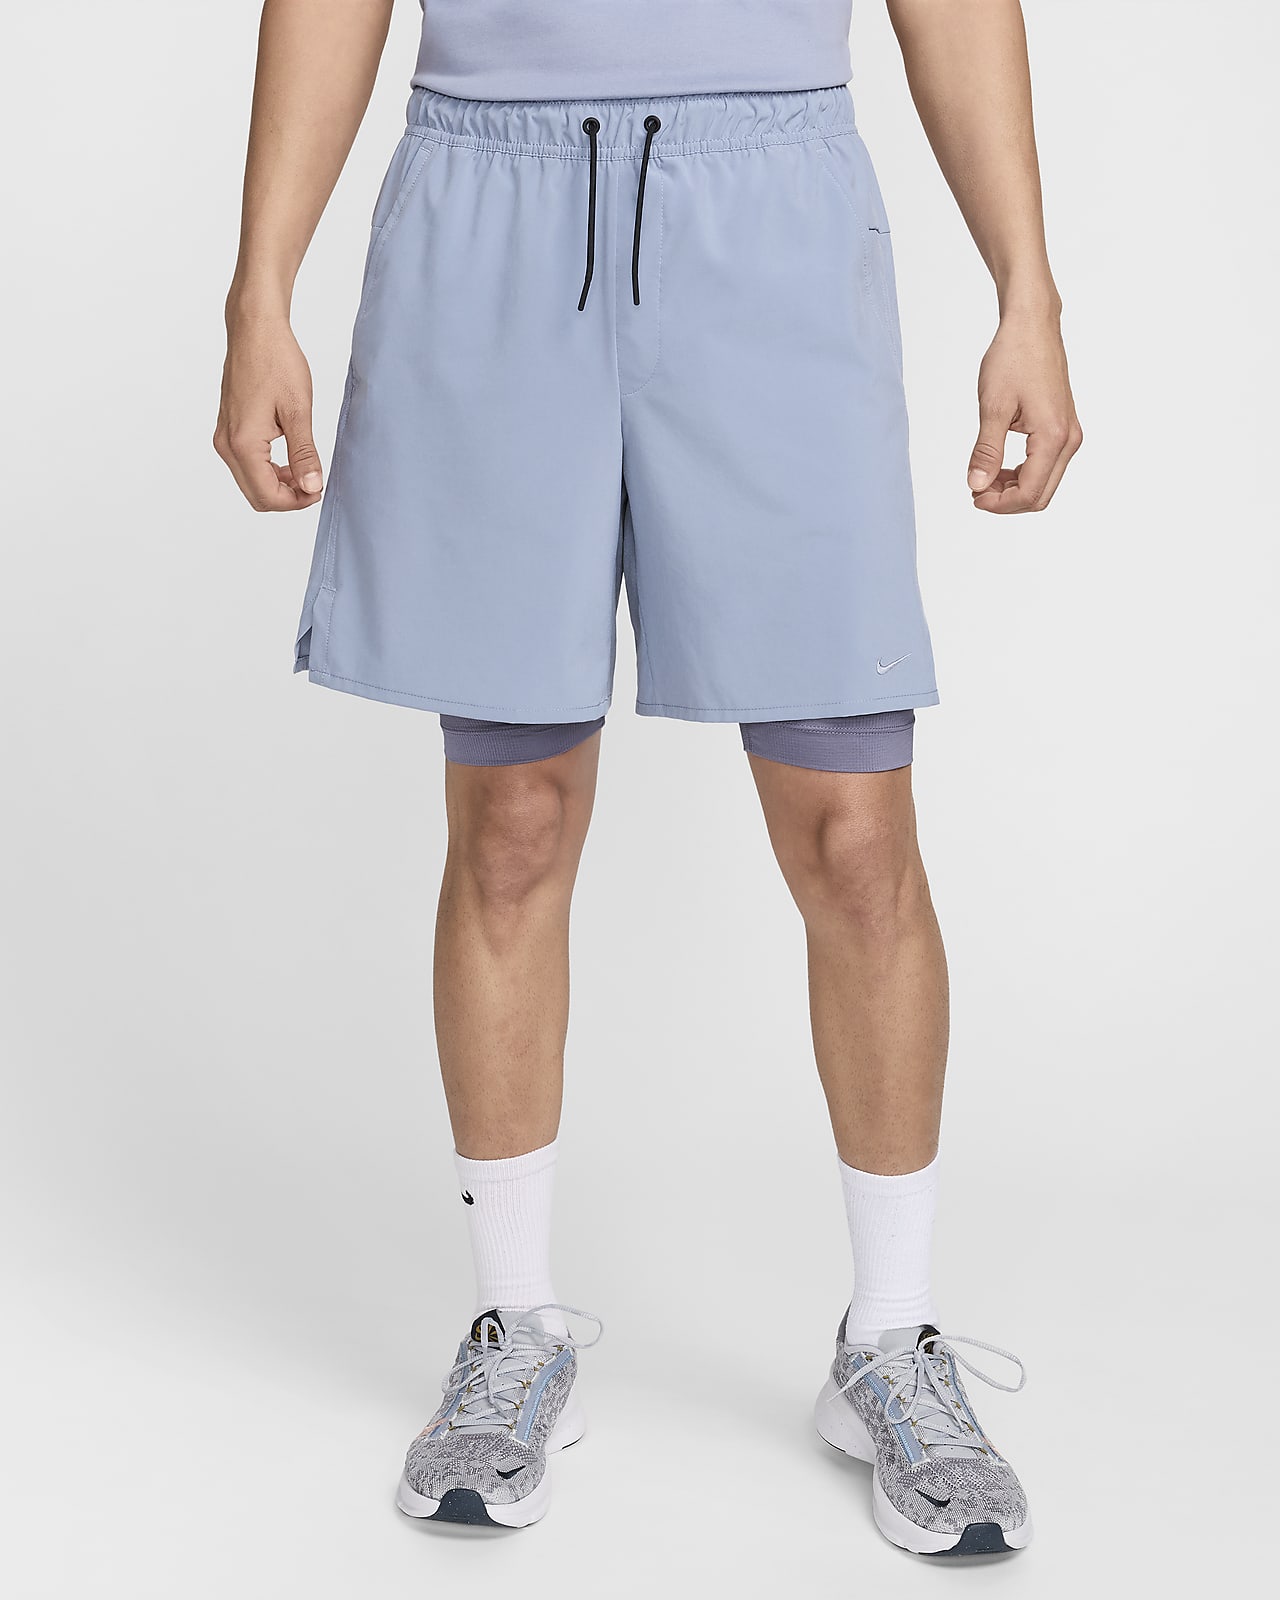 Everyday Short in Lake Blue, Men's Athletic Shorts